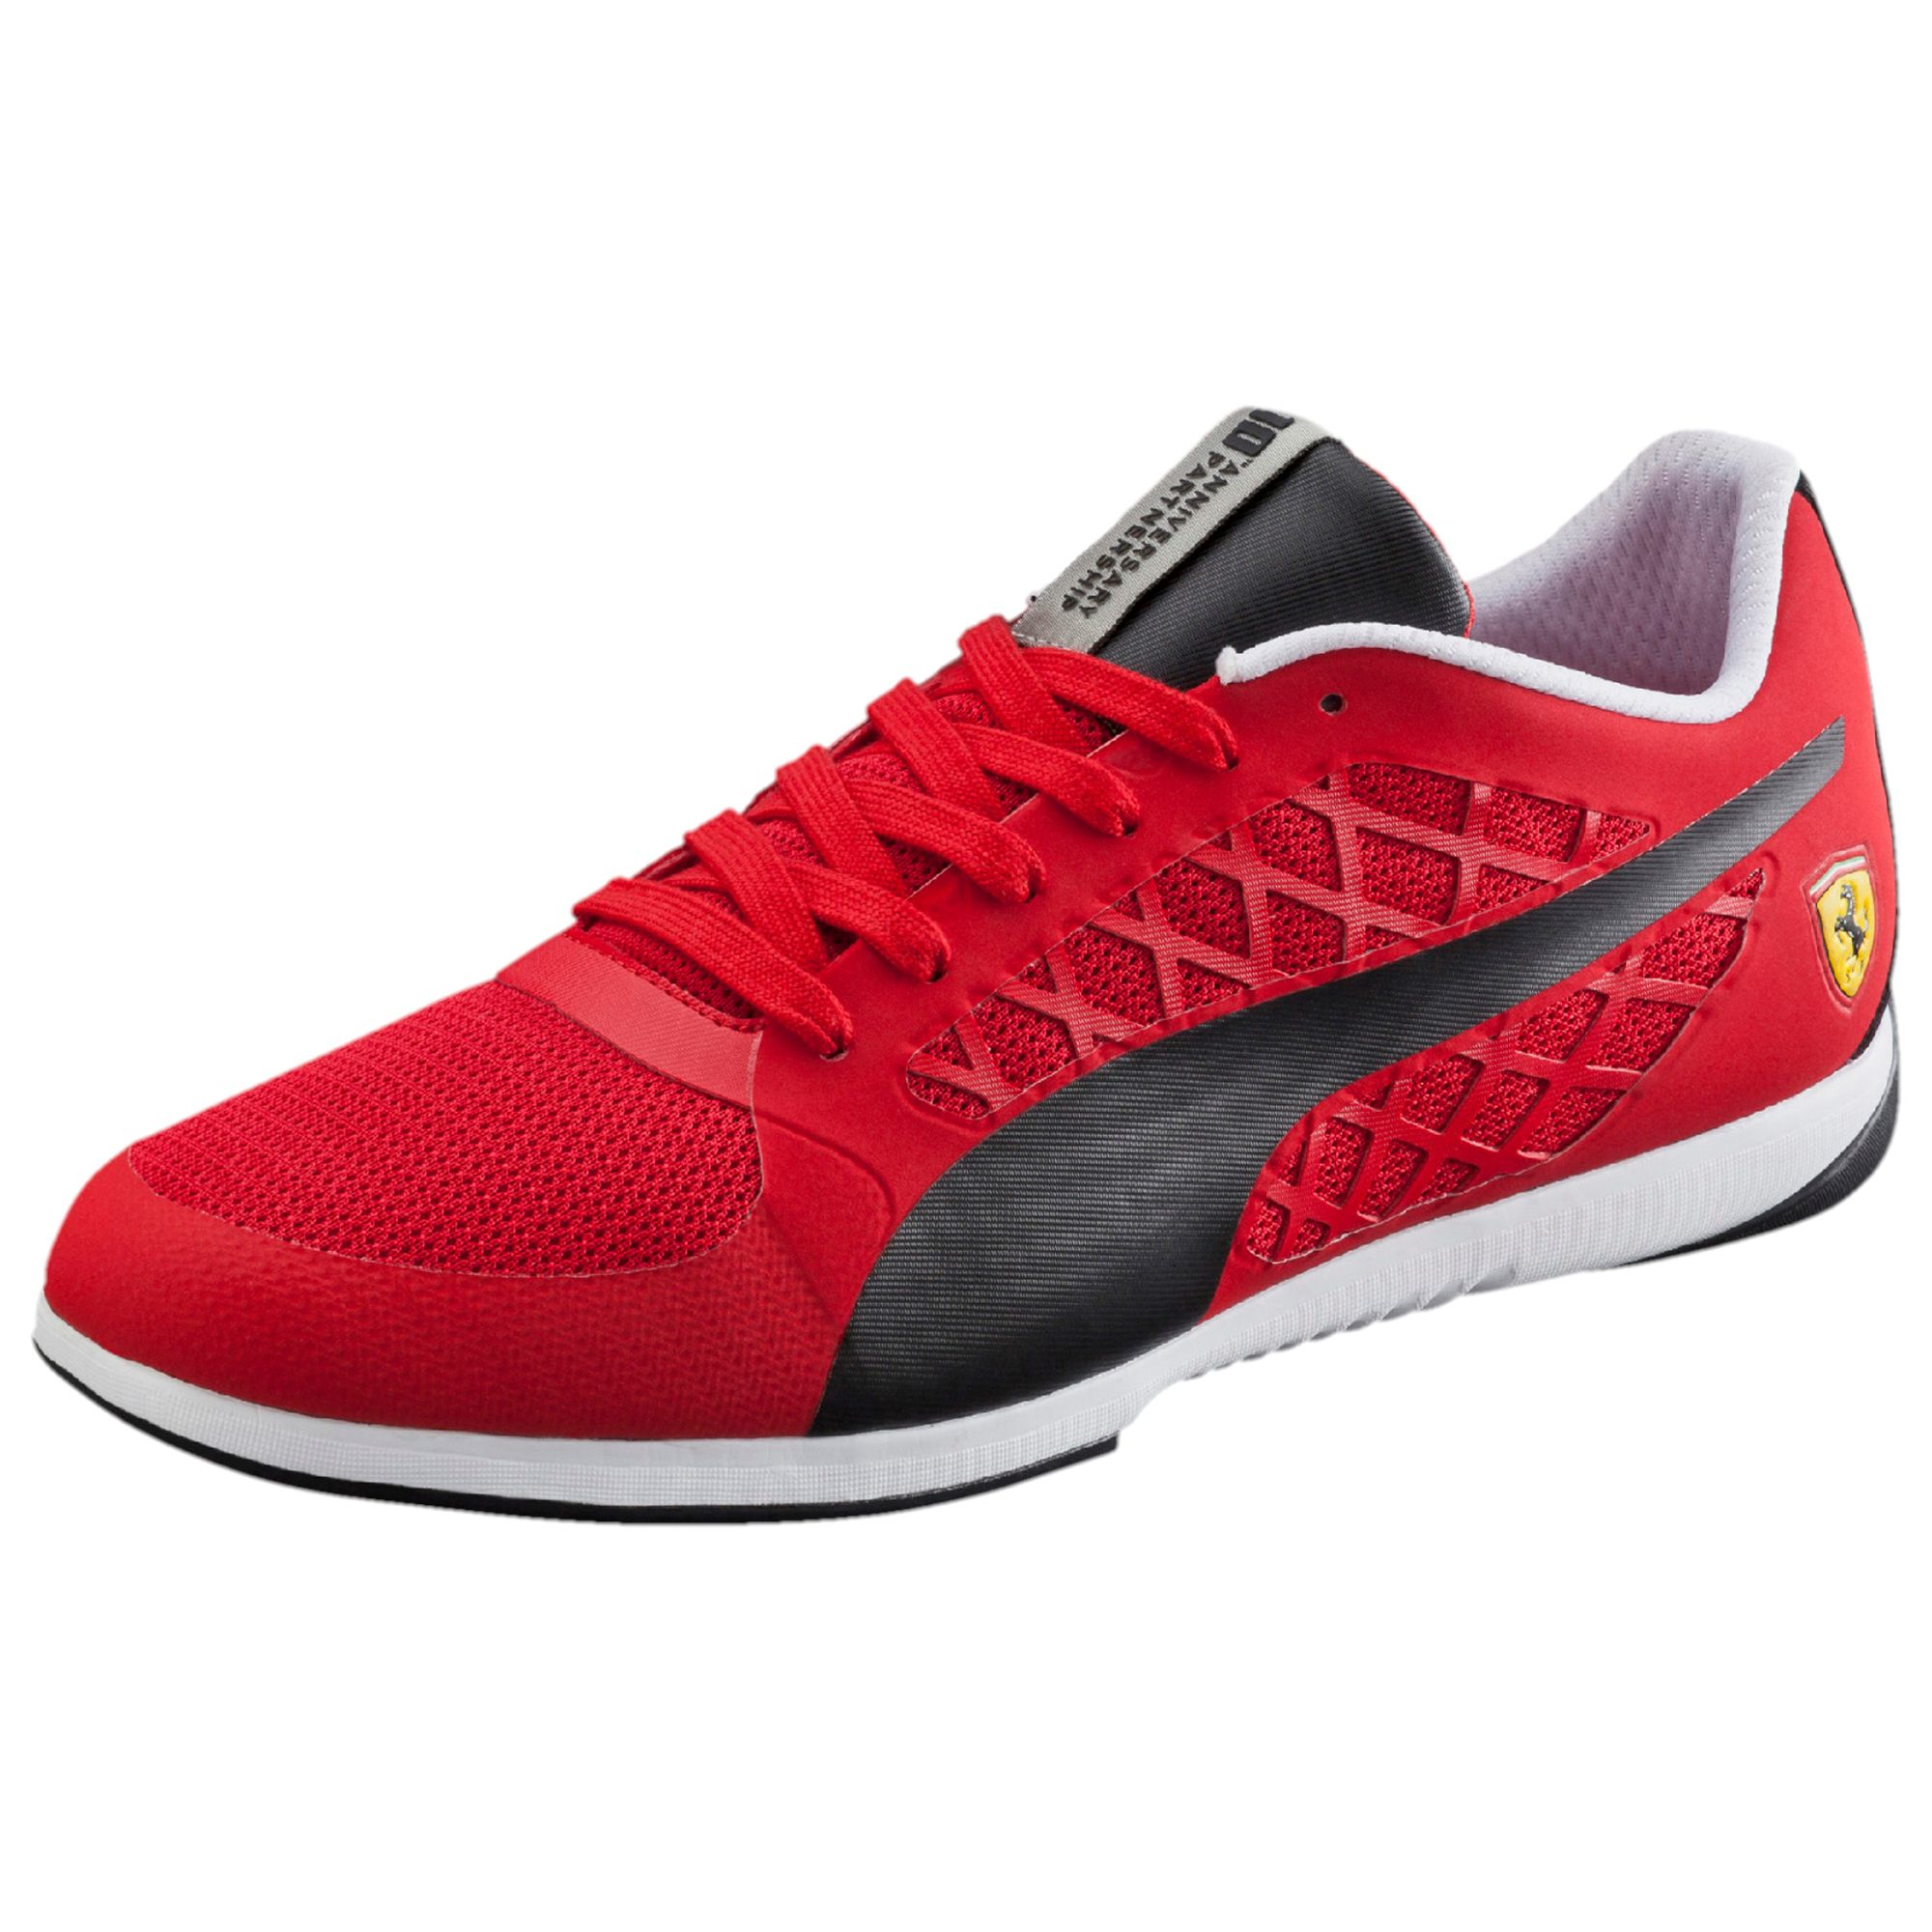 Lyst - Puma Ferrari Valorosso 2 Men's Shoes in Red for Men